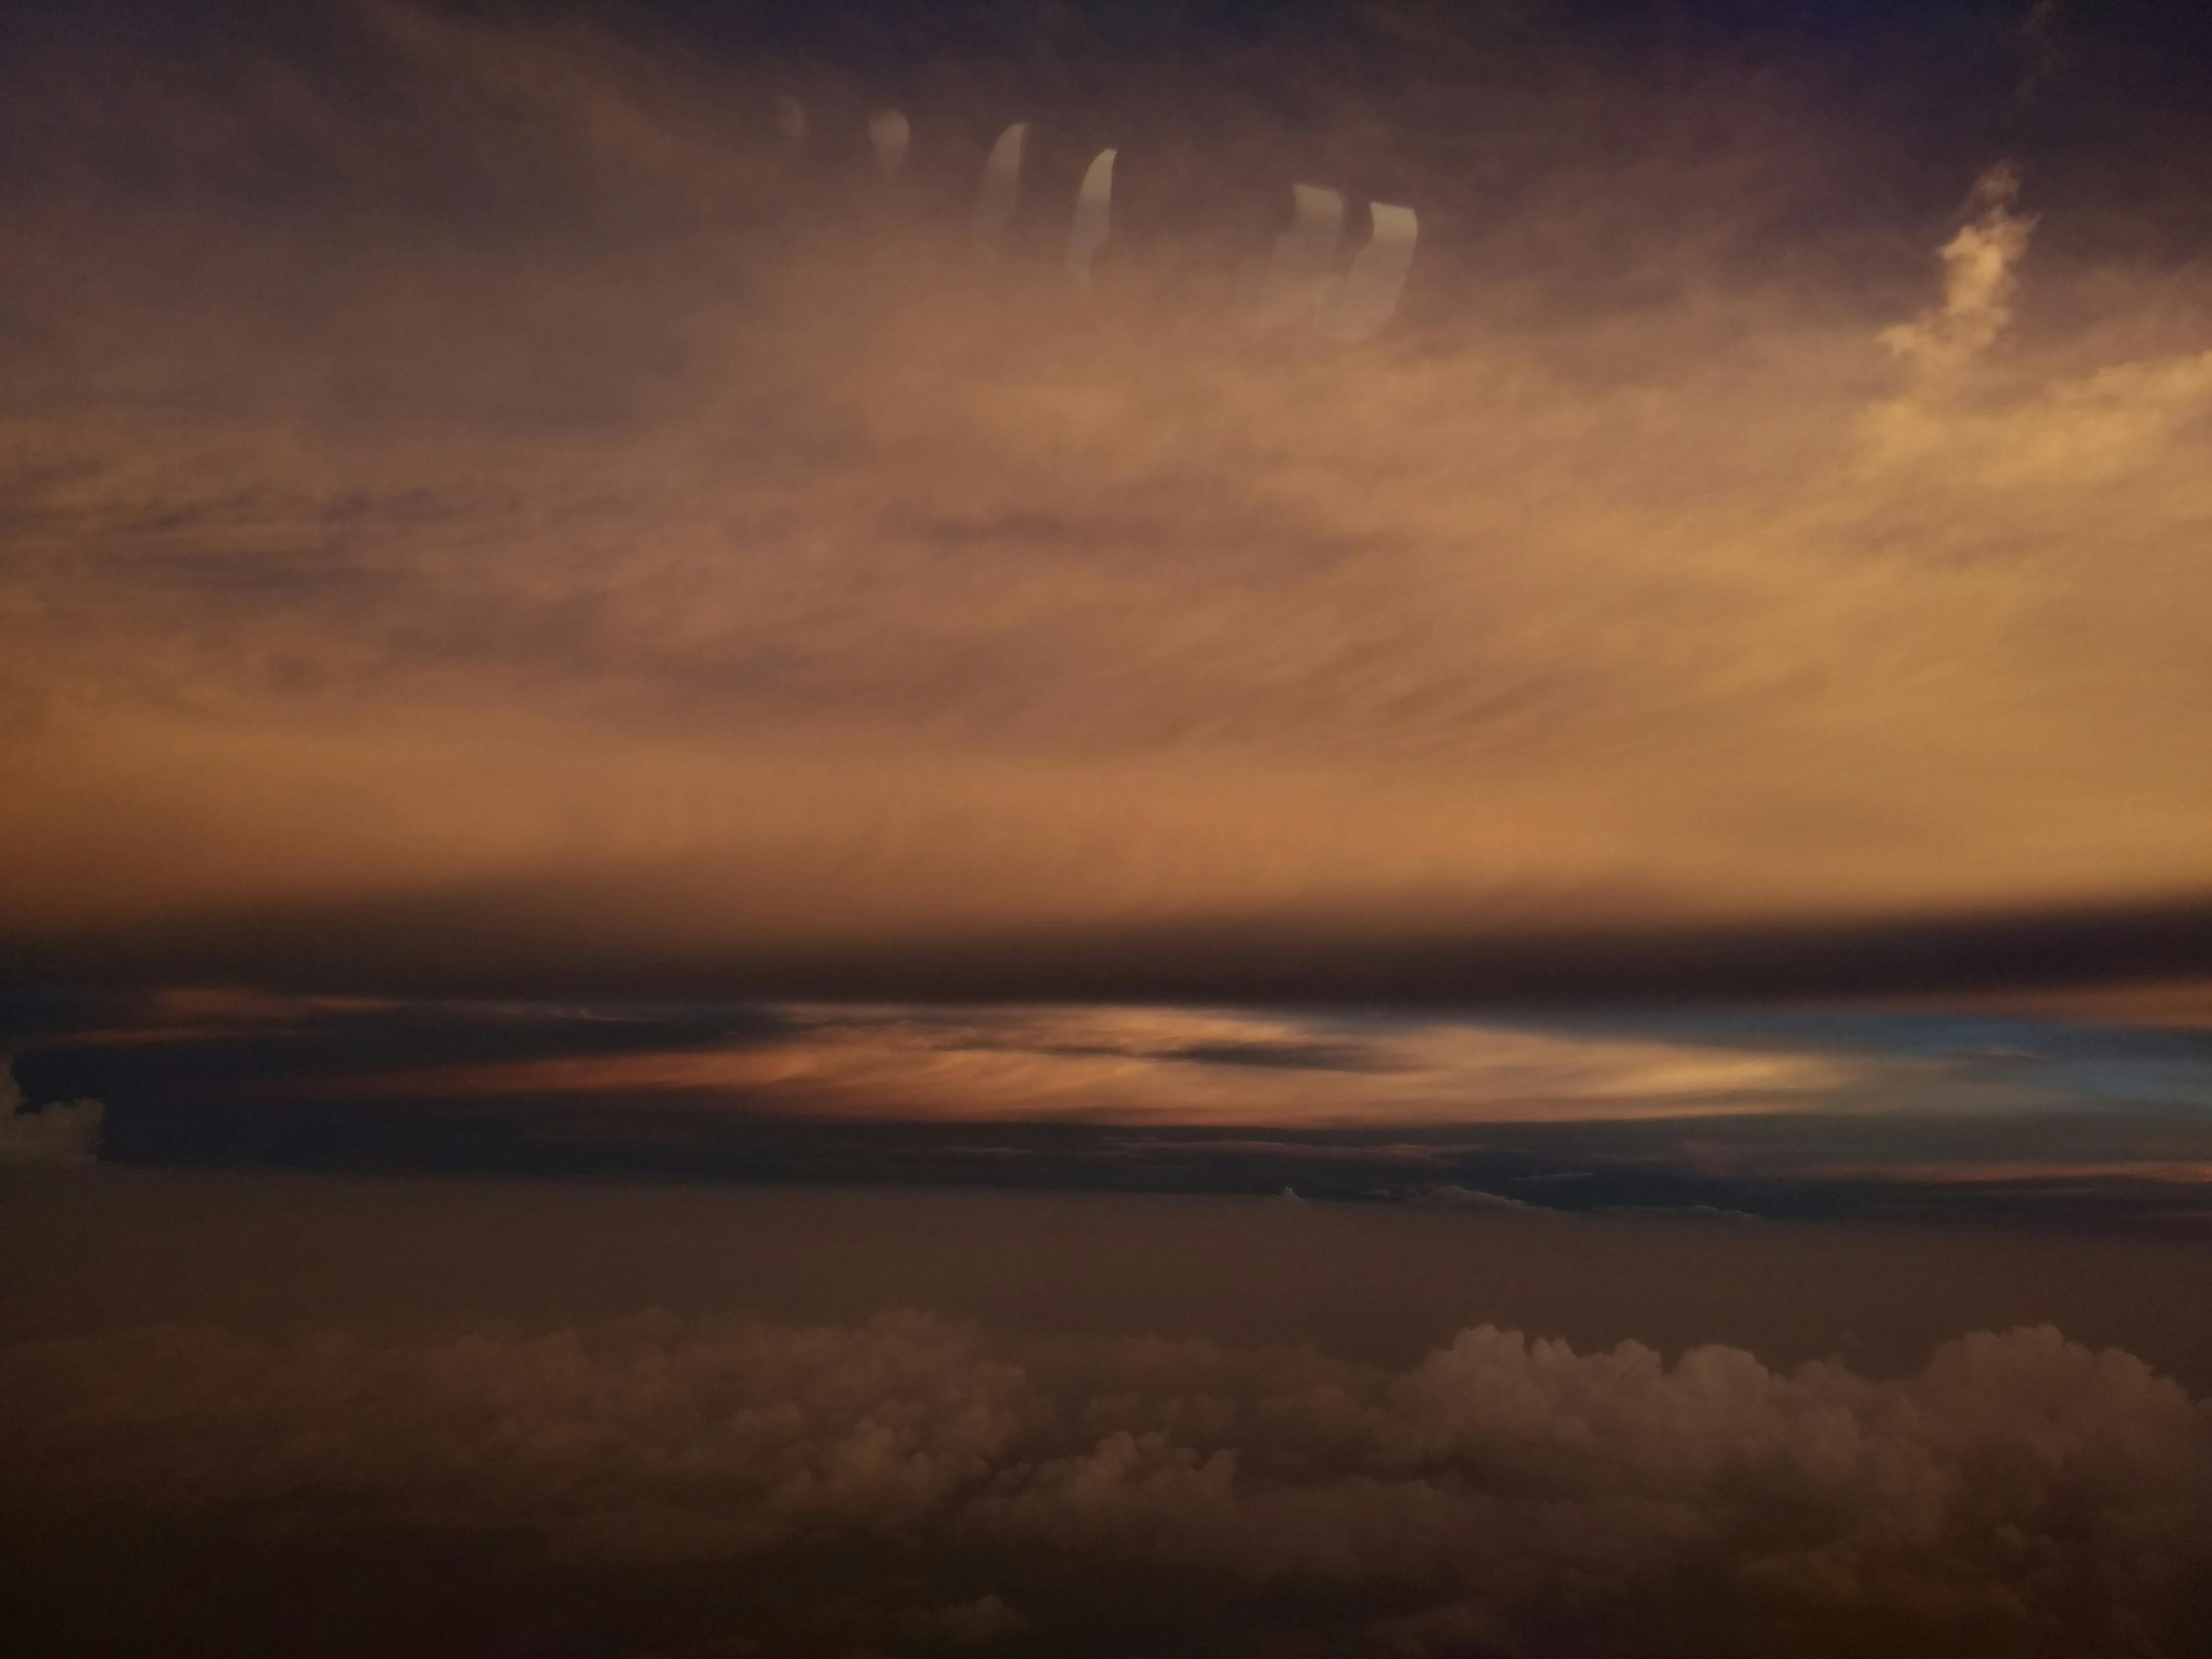 Shyamalinga Swaroopini 님의 Cloudland 컬렉션 사진 및 동영상 1개